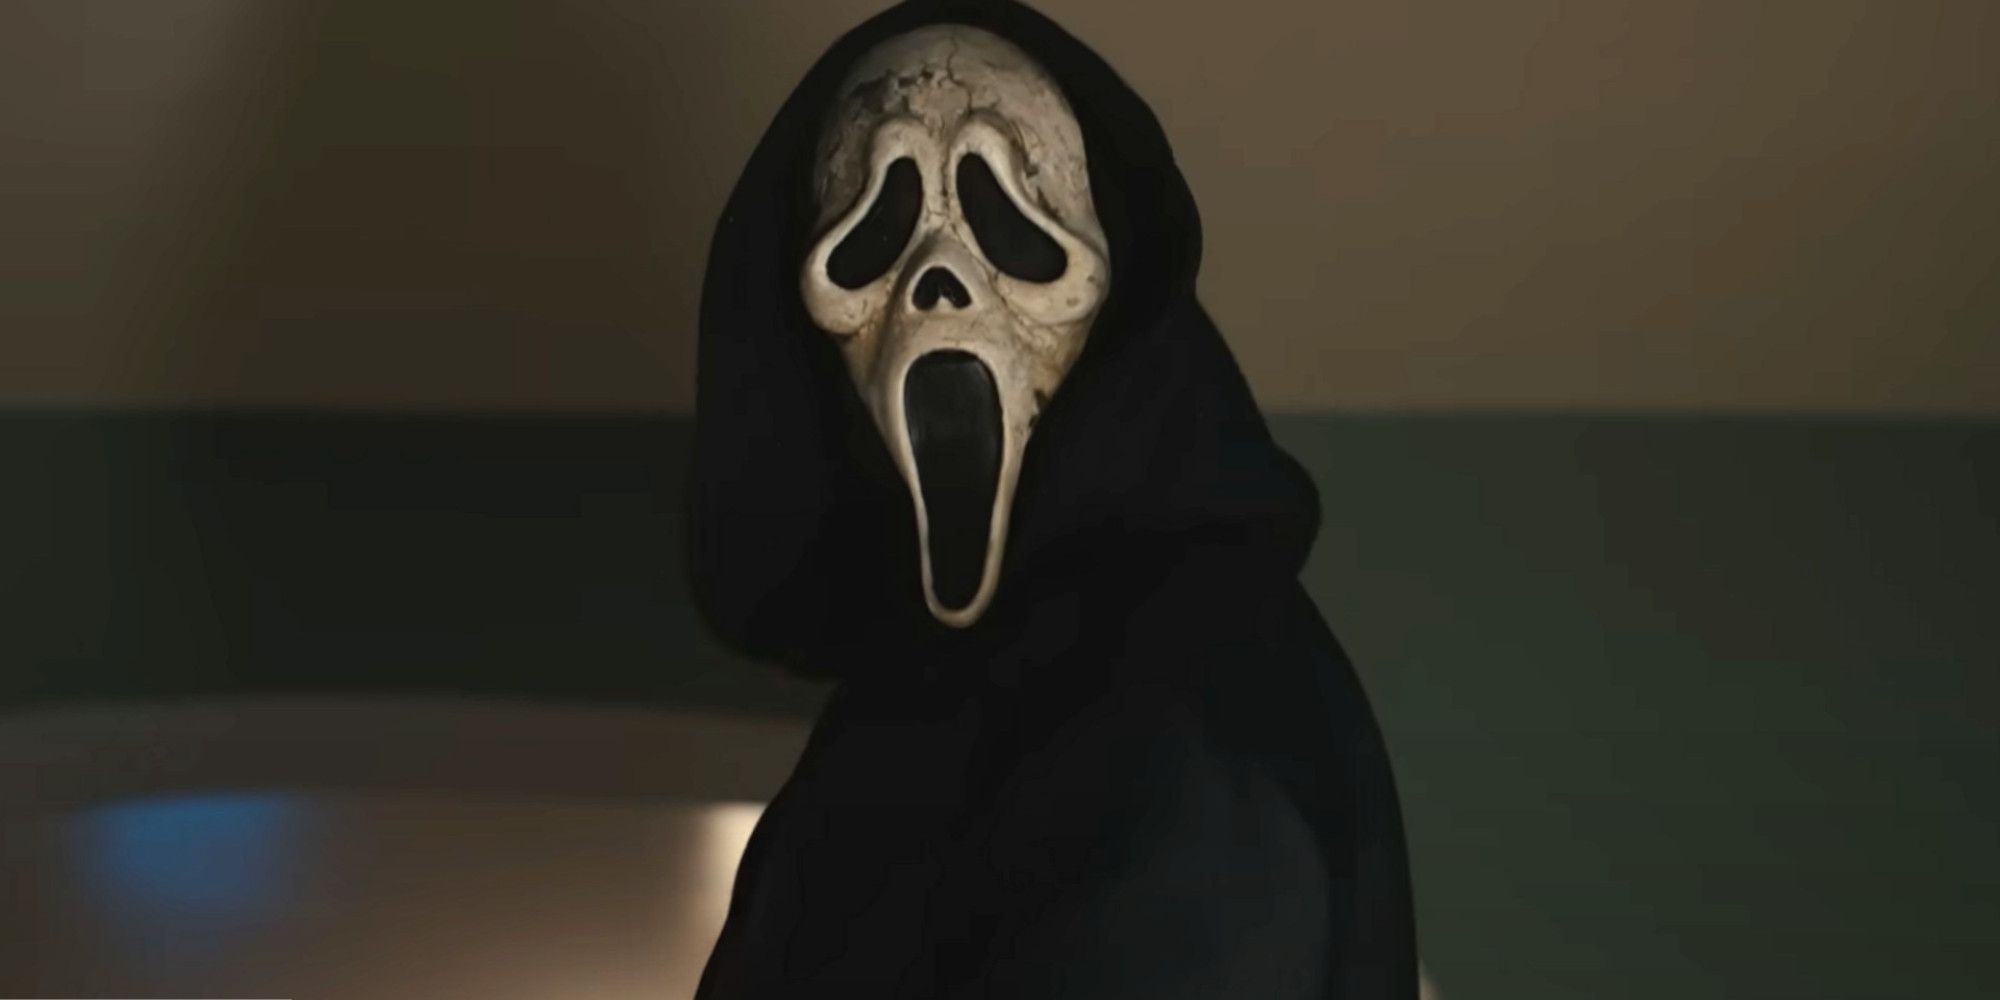 Ghostface terroizes in image from Scream VI.